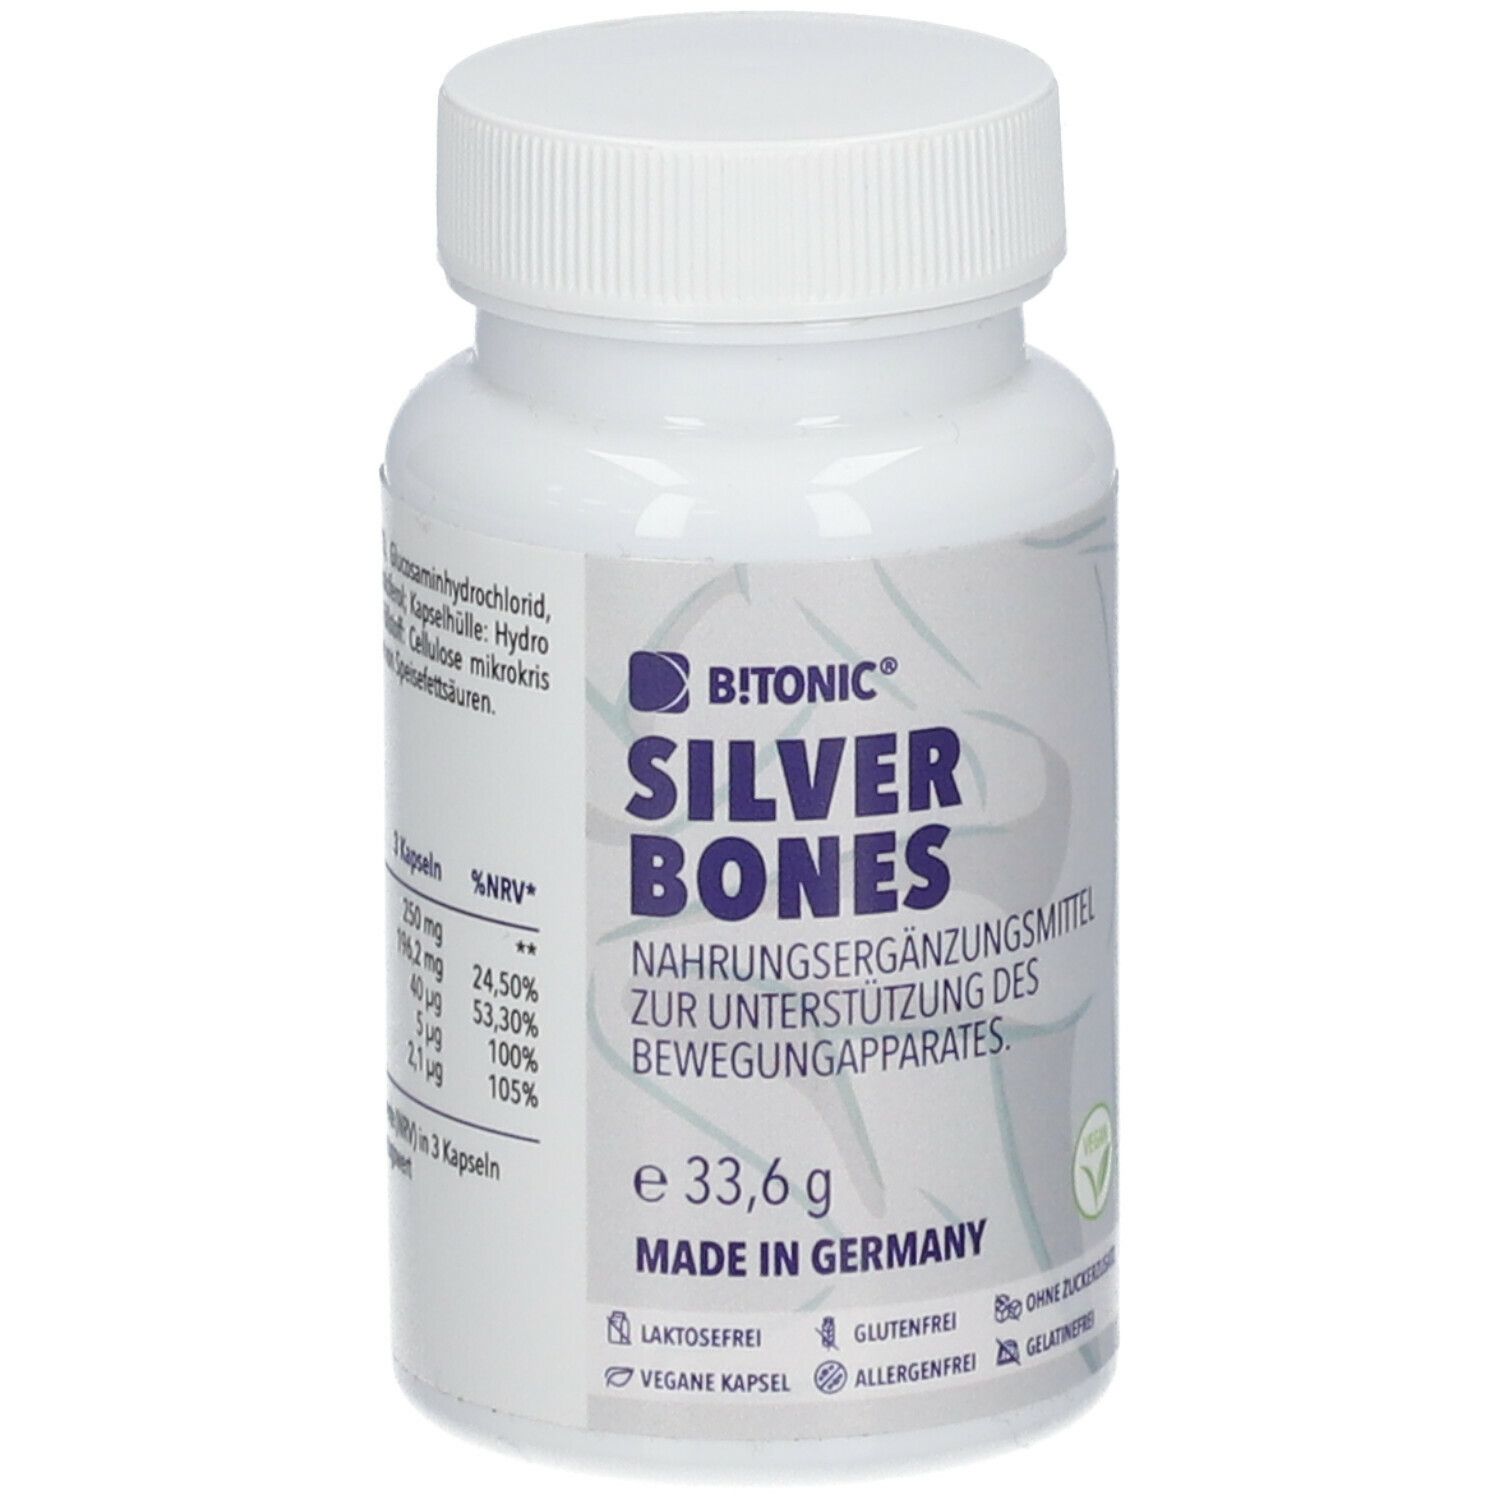 B!TONIC® Silver Bones